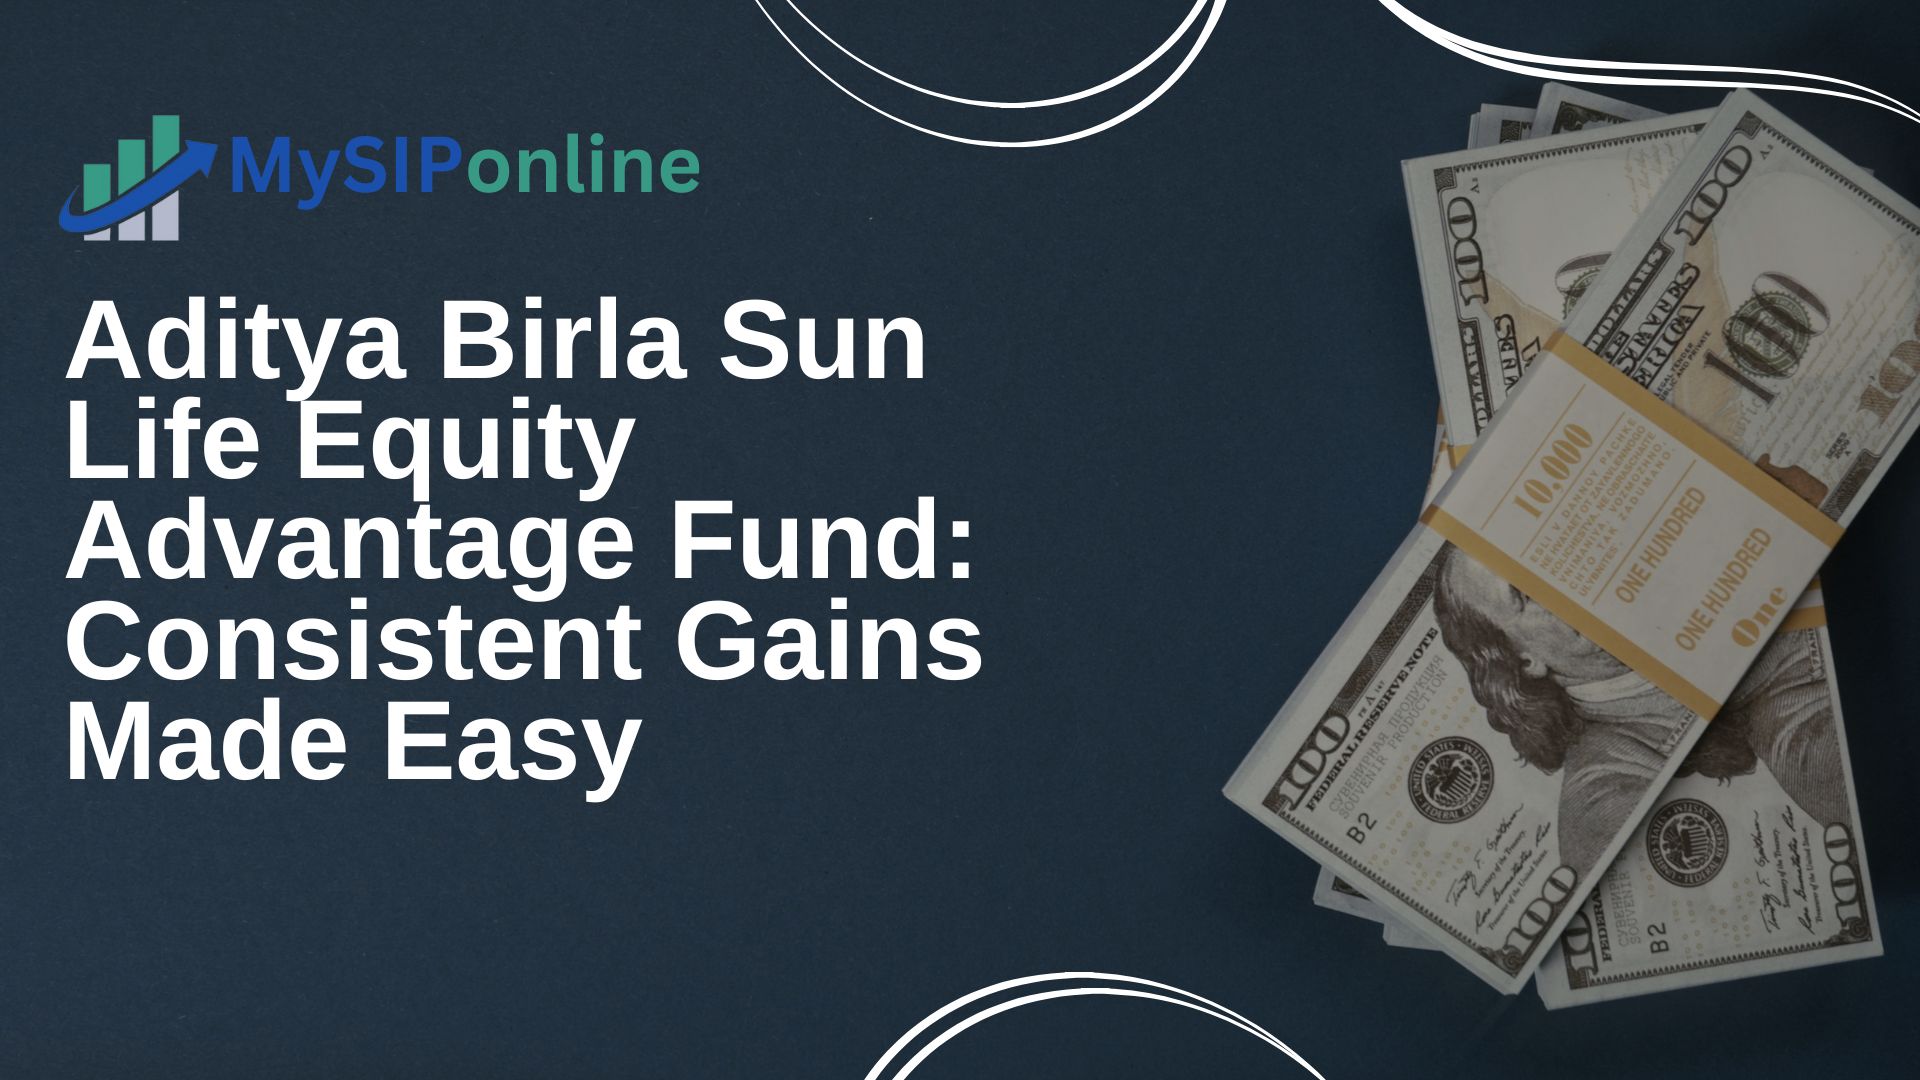 Aditya Birla Sun Life Equity Advantage Fund: Consistent Gains Made Easy